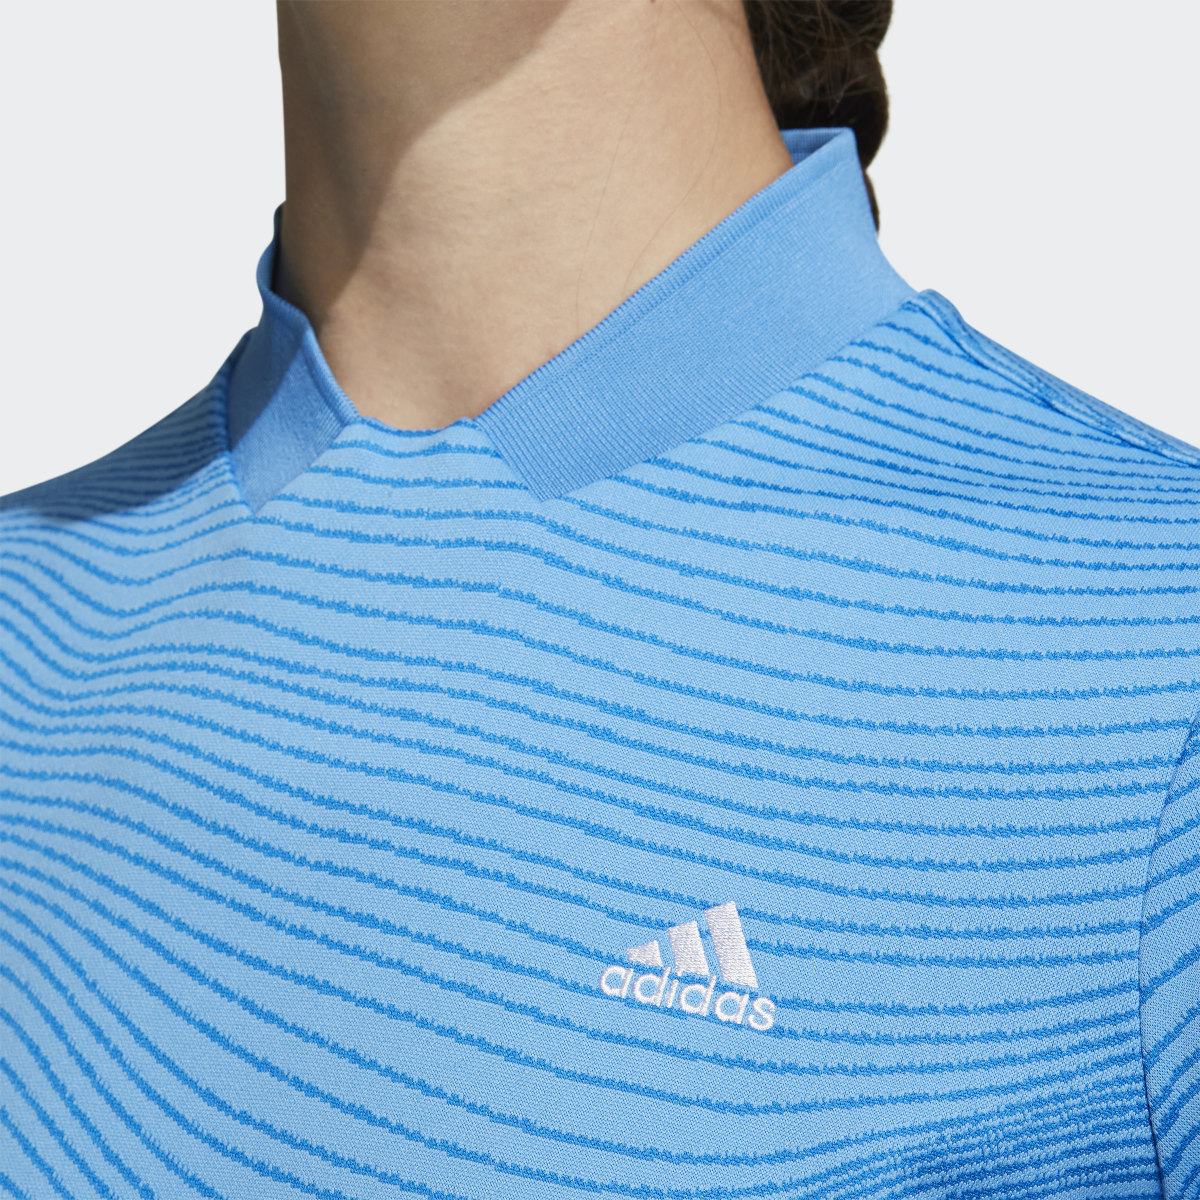 Adidas Polo Made to be Remade Rib Collar. 7